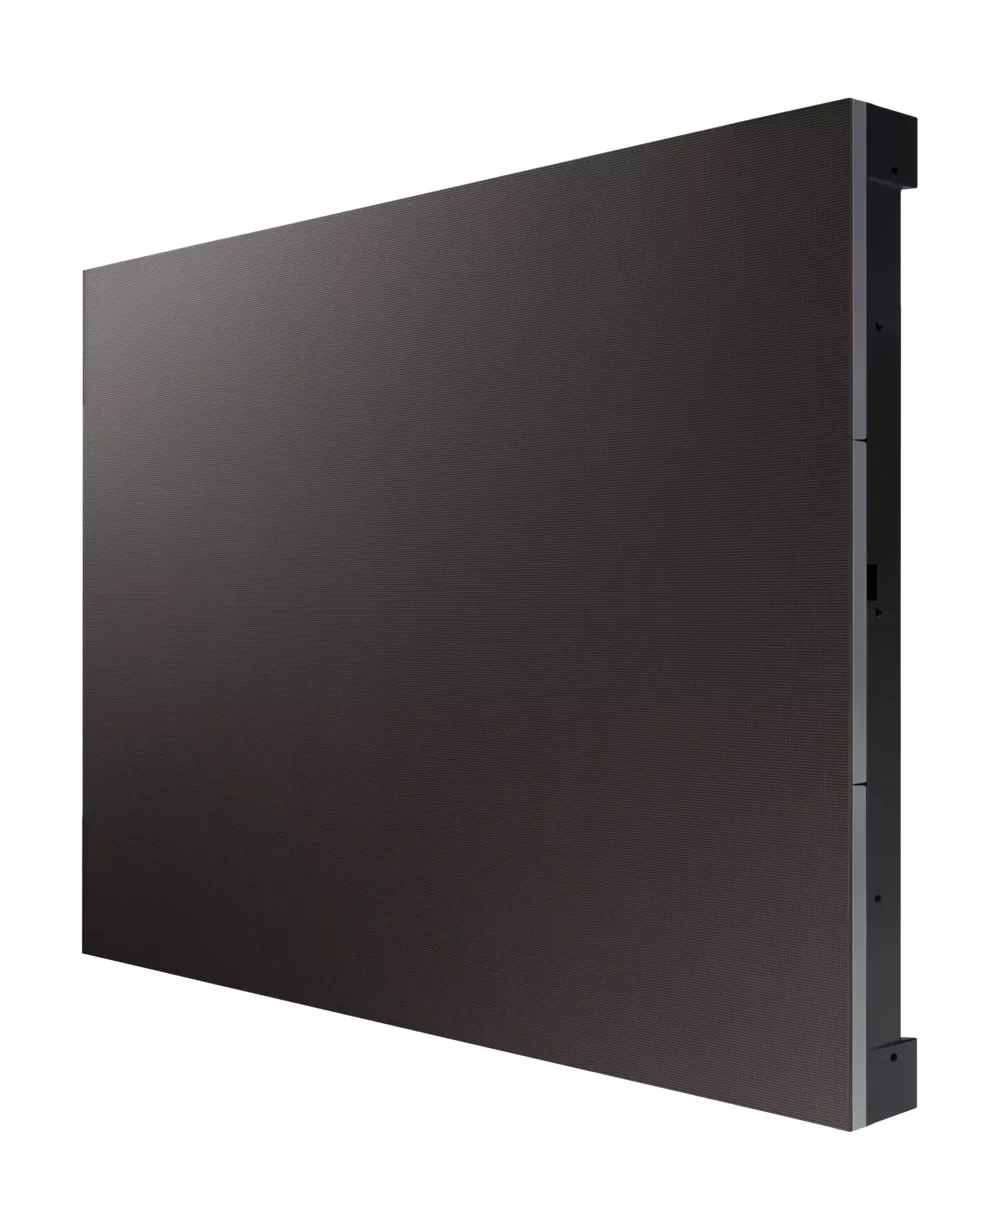 Vente Samsung IFJ-series 1.2 pixel pitch Indoor LED cabinet Samsung au meilleur prix - visuel 6